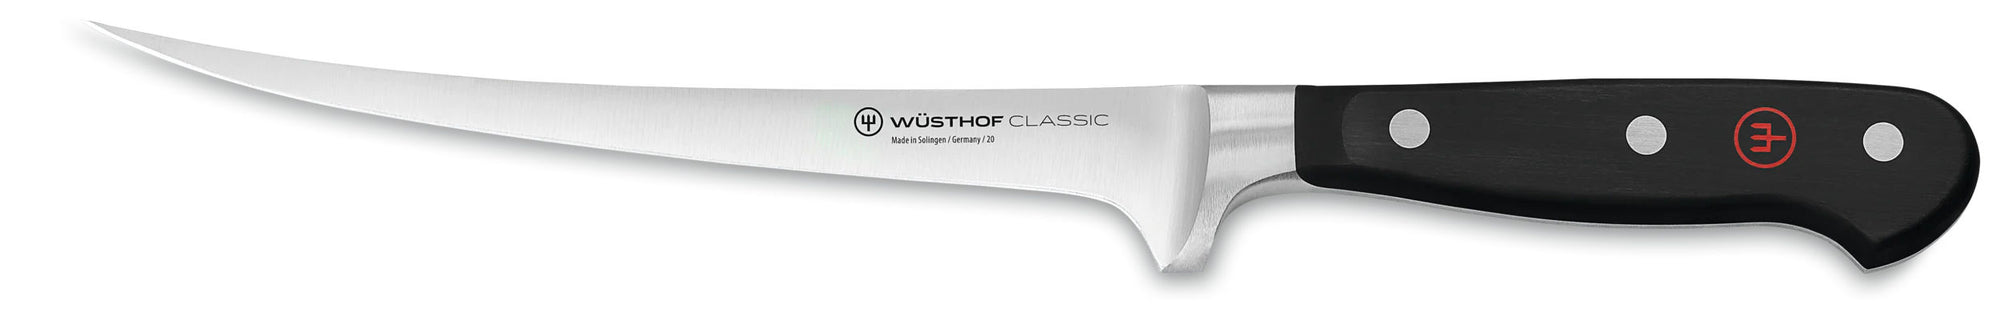 Wusthof Classic Fillet Knife, 7-inch (18 cm) - 4622